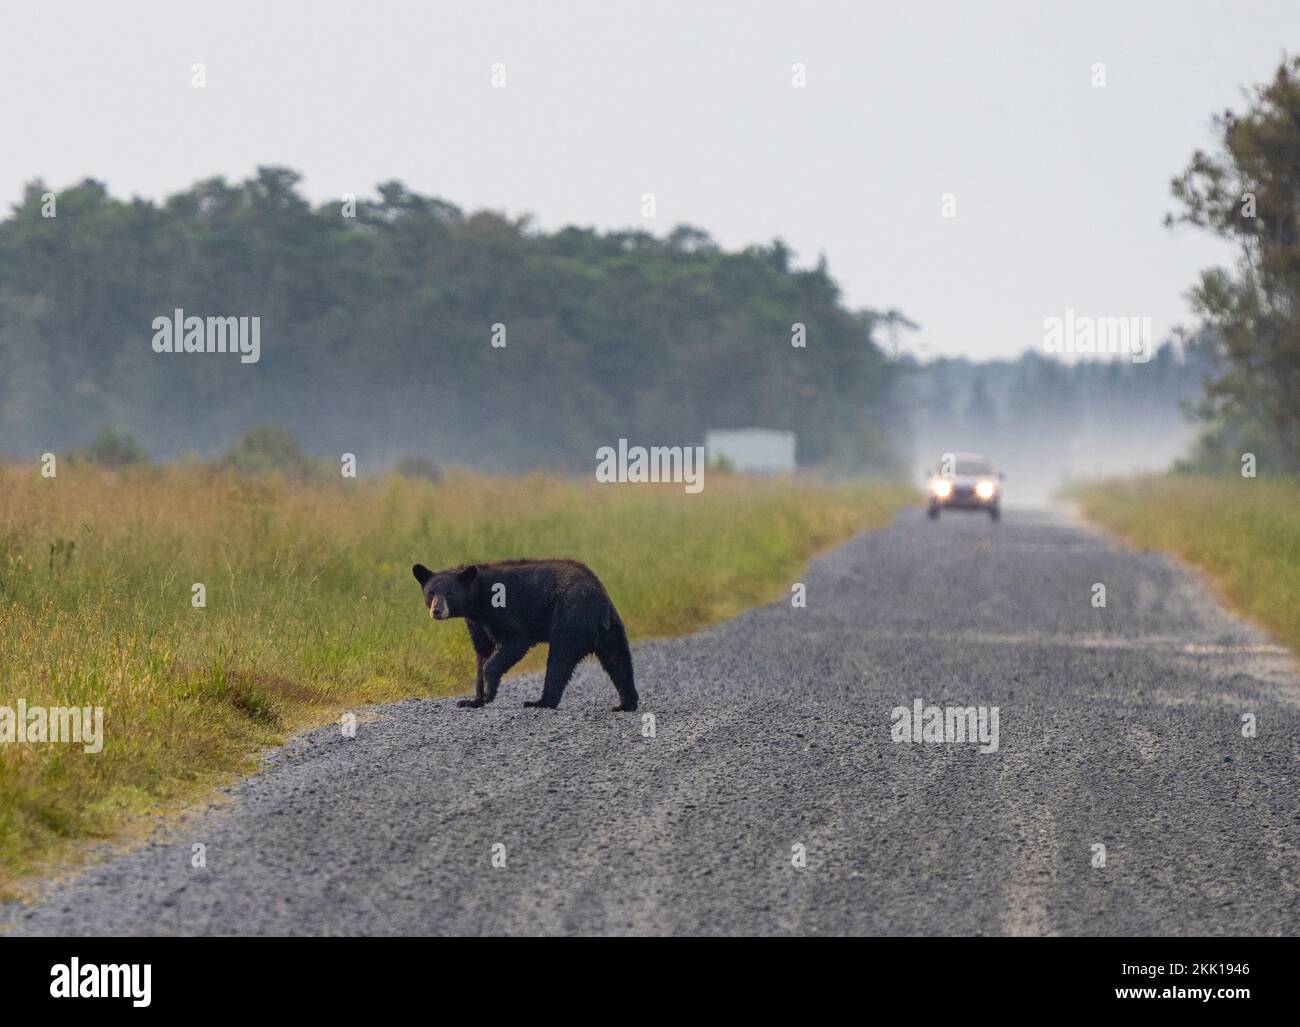 American Black Bear (Ursus americanus) crossing road with car in background Stock Photo